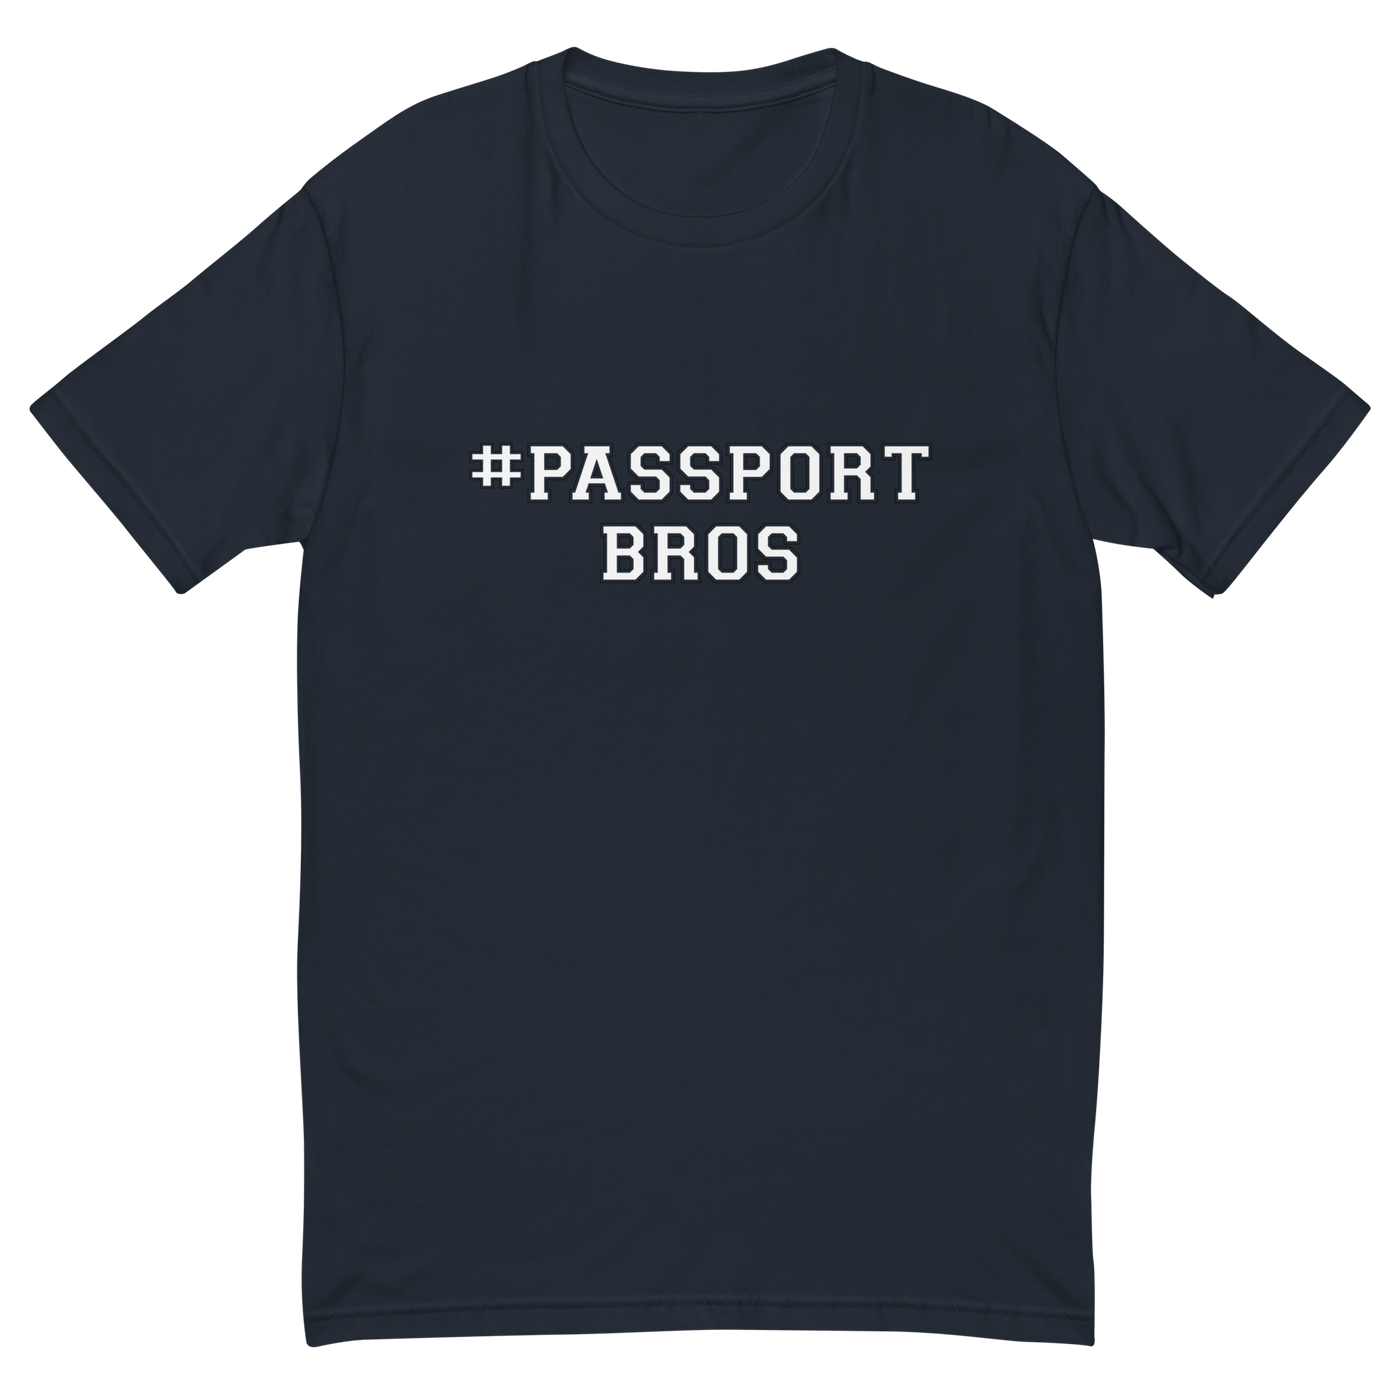 "Passport Bros" T-Shirt